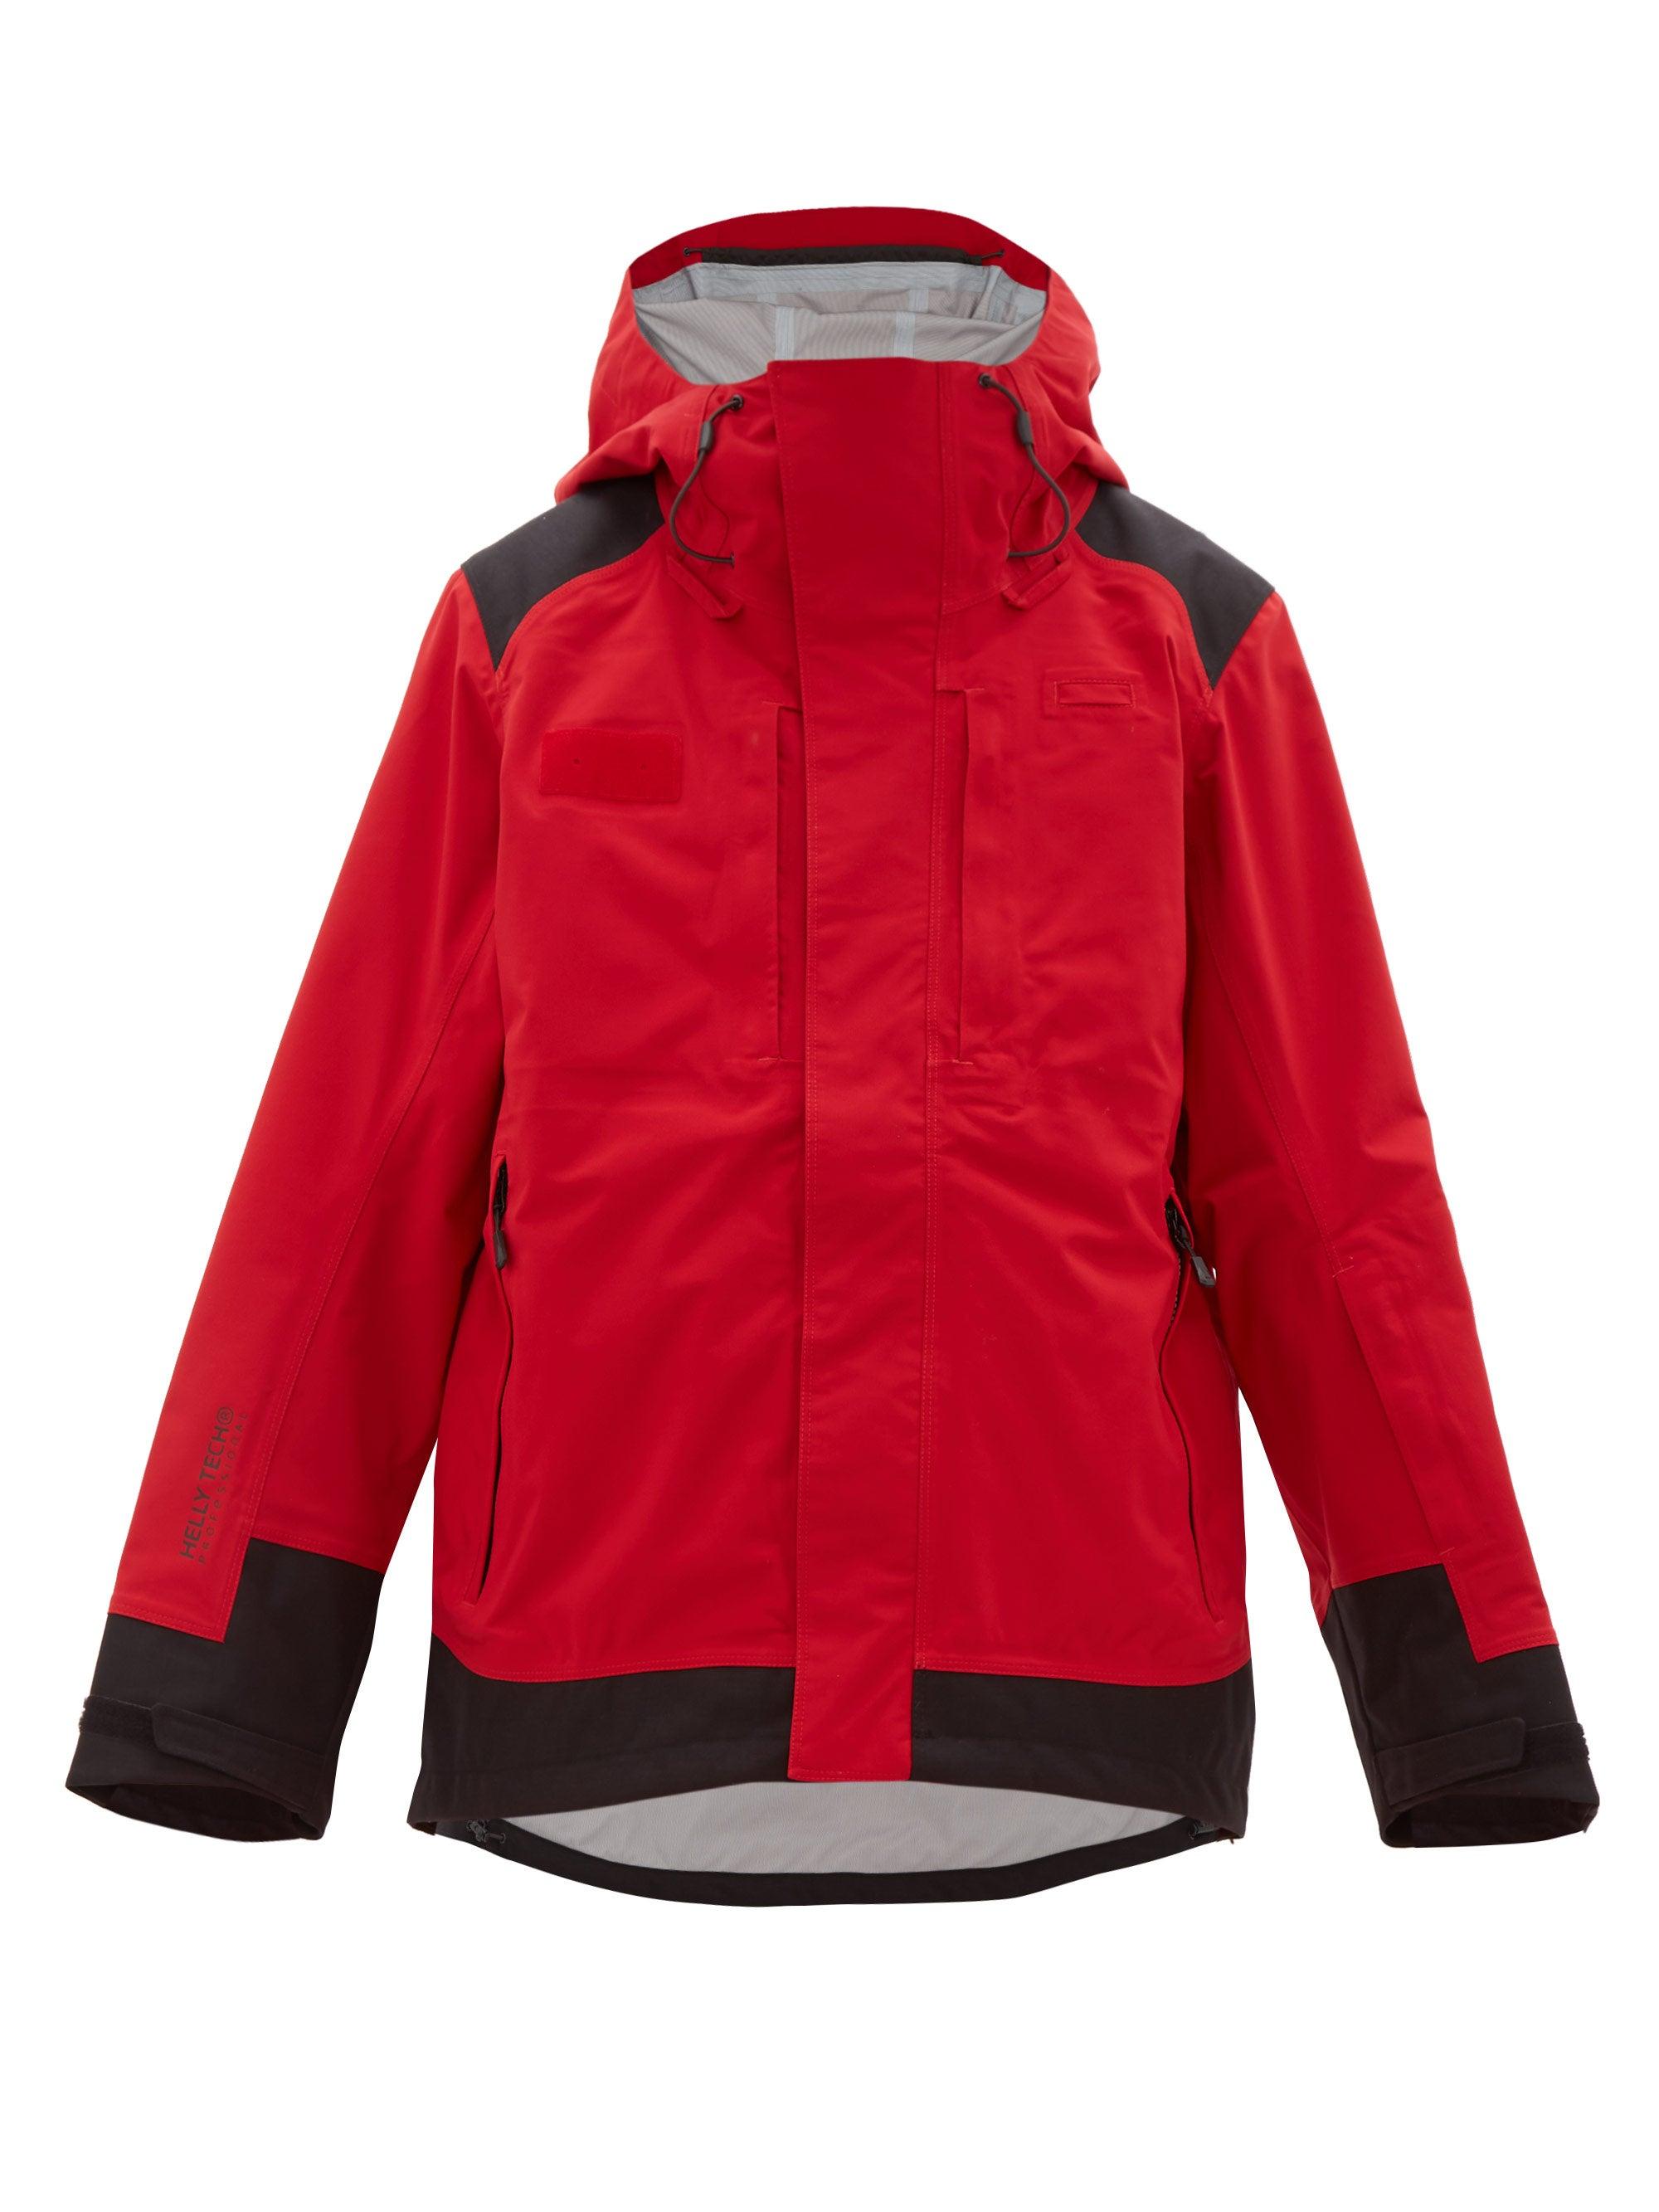 Helly Hansen Patrol Hooded Ski Jacket in Red for Men - Lyst